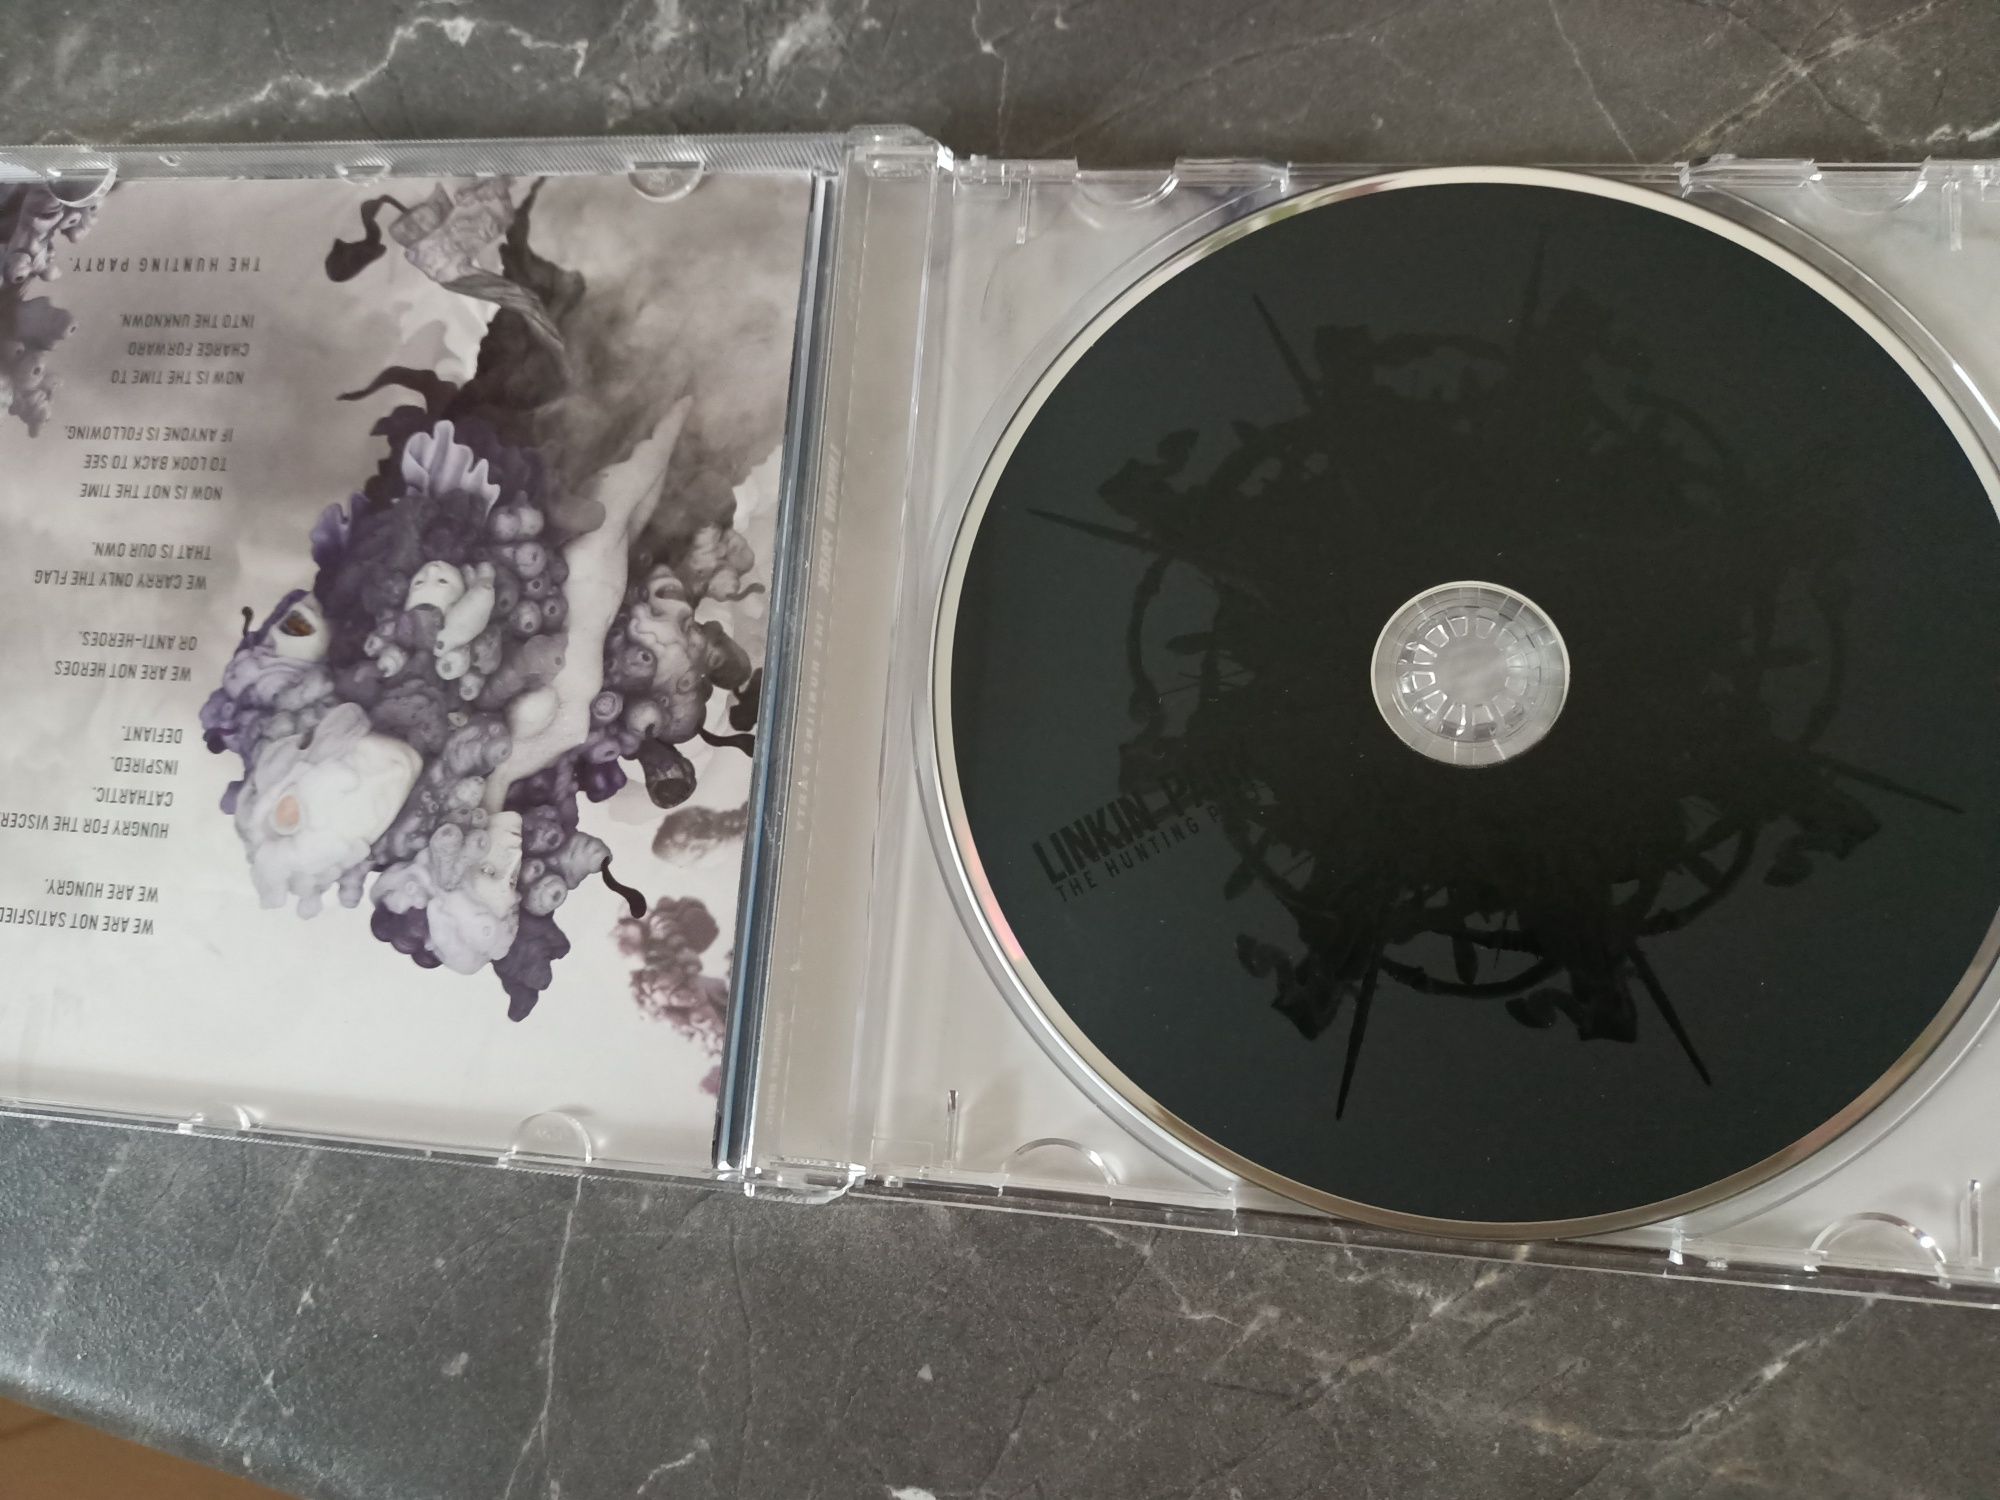 Linkin Park - The Hunting Party (CD, Album + DVD-V, NTSC)(vg+)